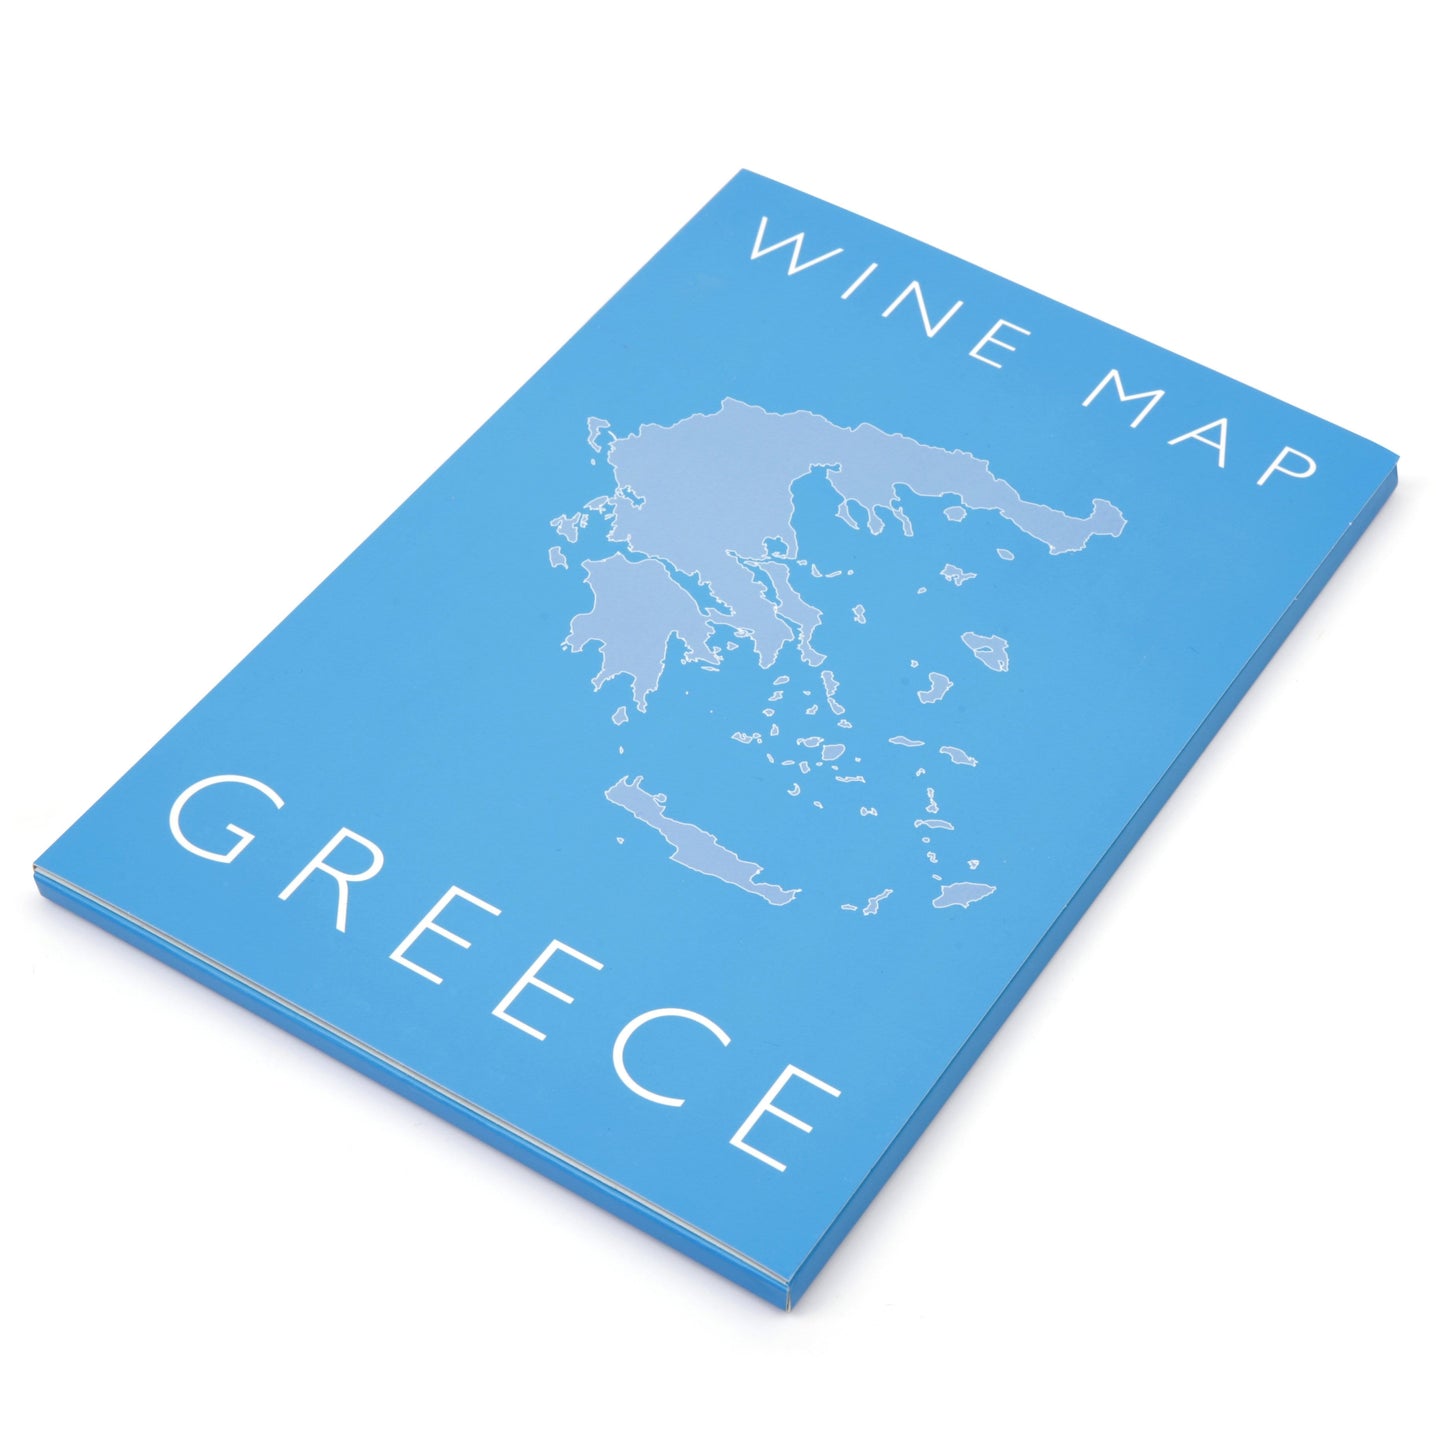 Wine maps of Greece, bookshelf edition